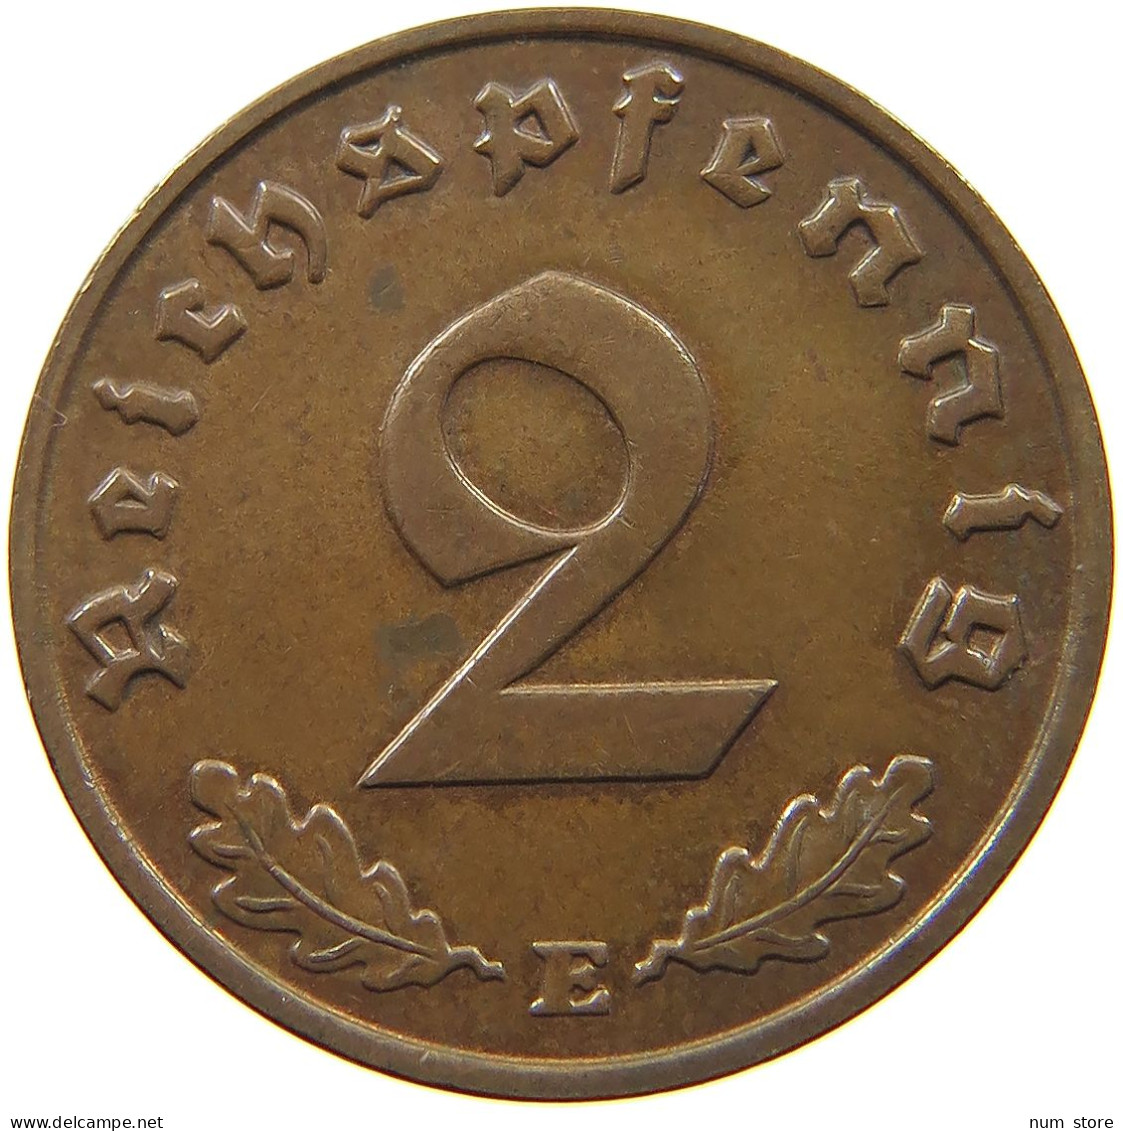 GERMANY 2 PFENNIG 1939 E #a032 0349 - 2 Reichspfennig